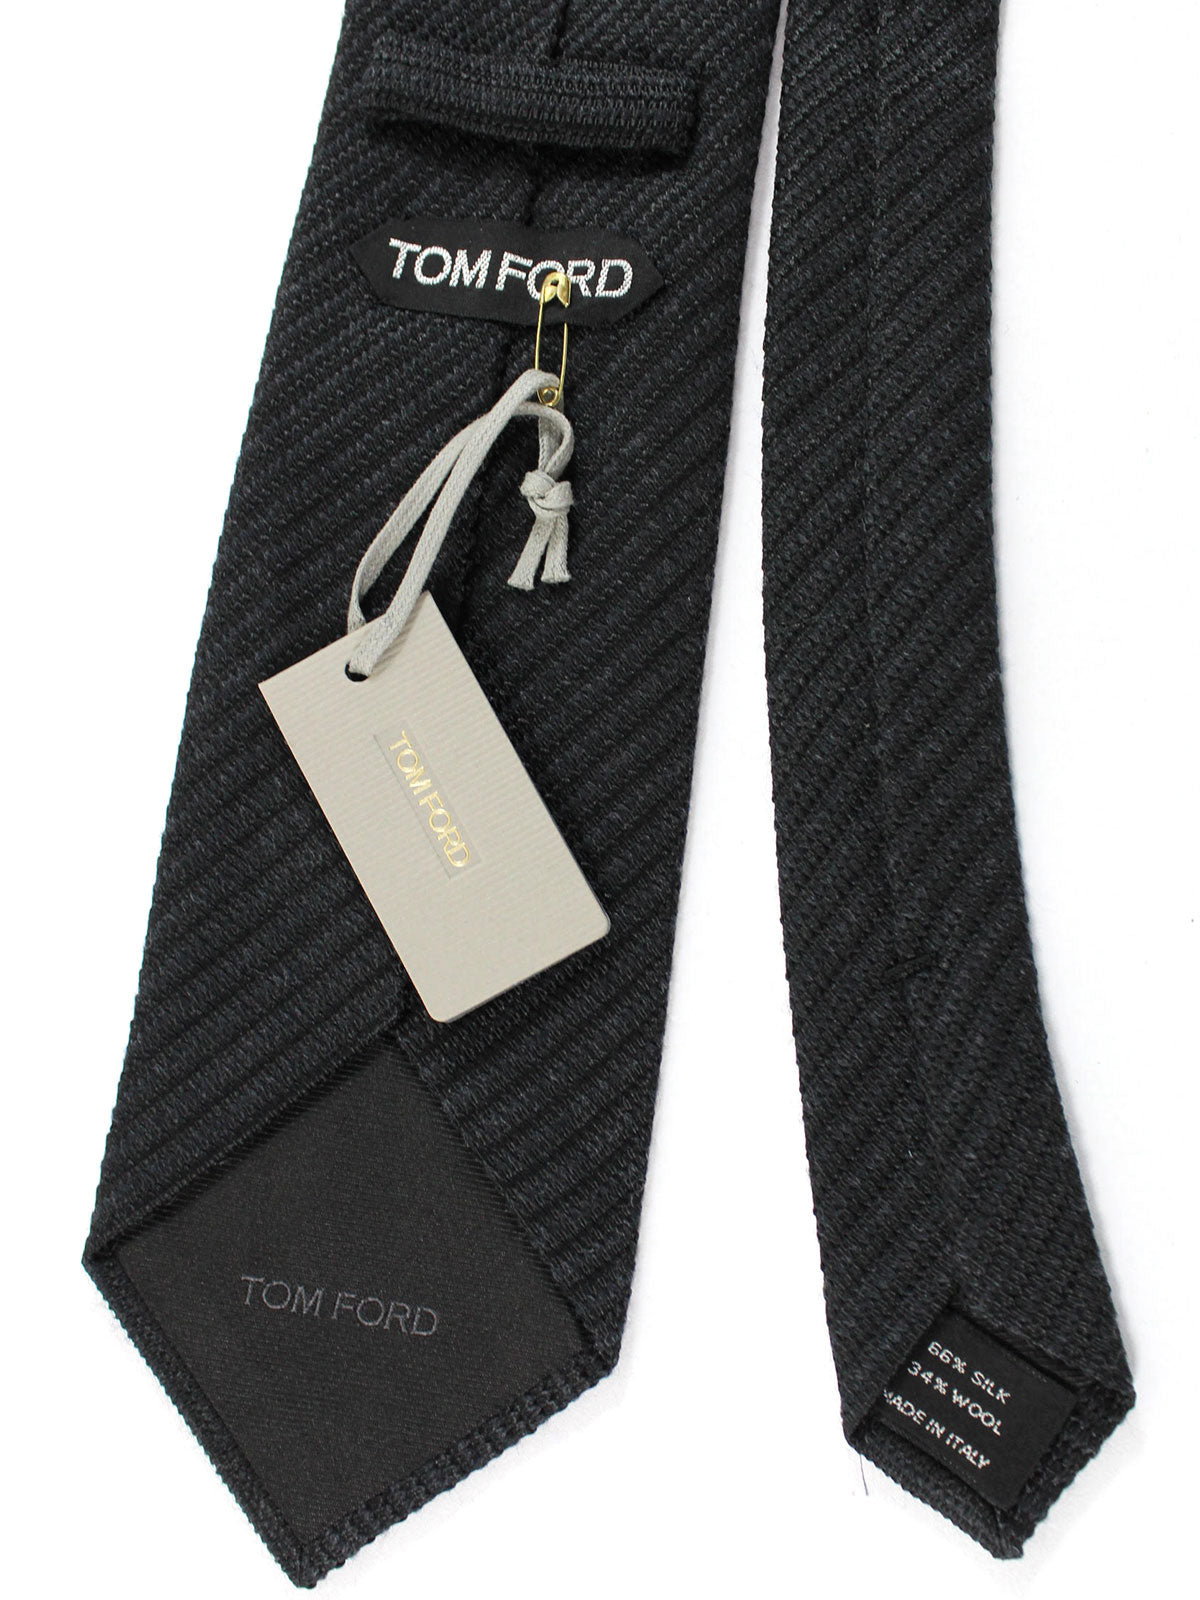 Tom Ford Tie Black Grosgrain - Tie Deals